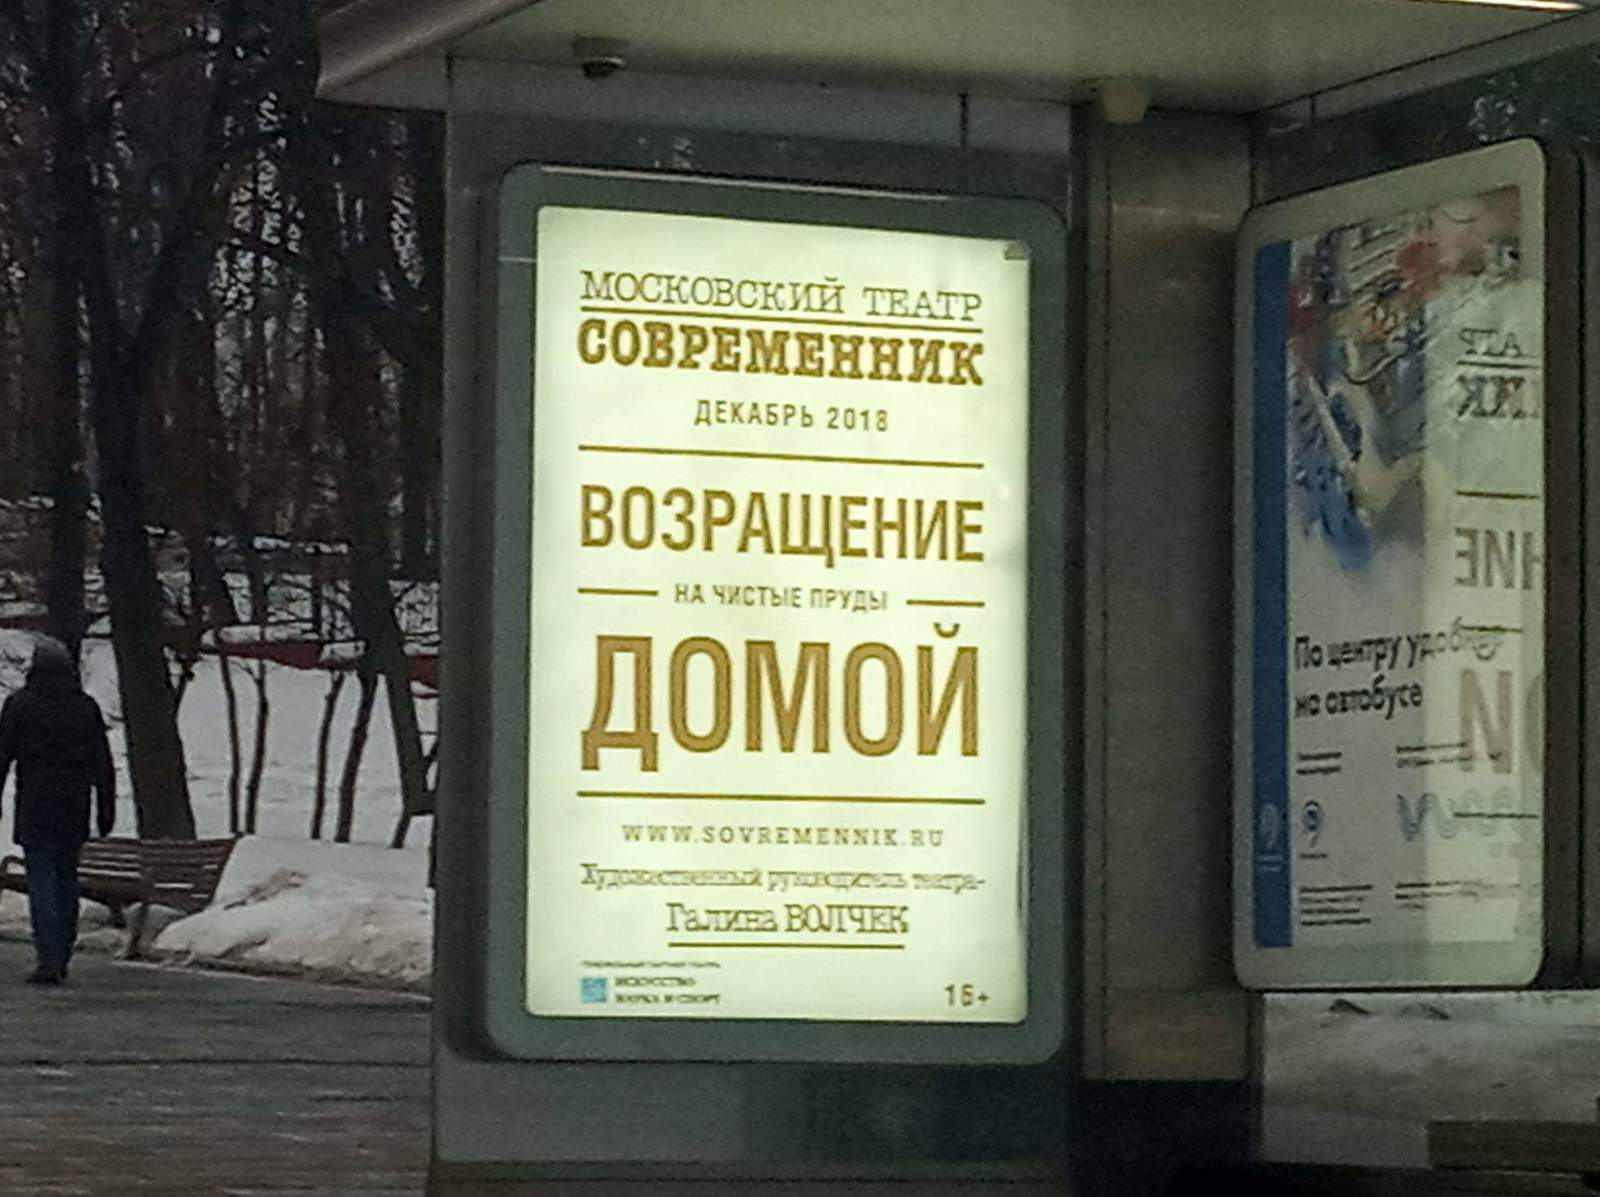 Literacy disaster - Literacy, Sovremennik Theatre, Moscow, Poster